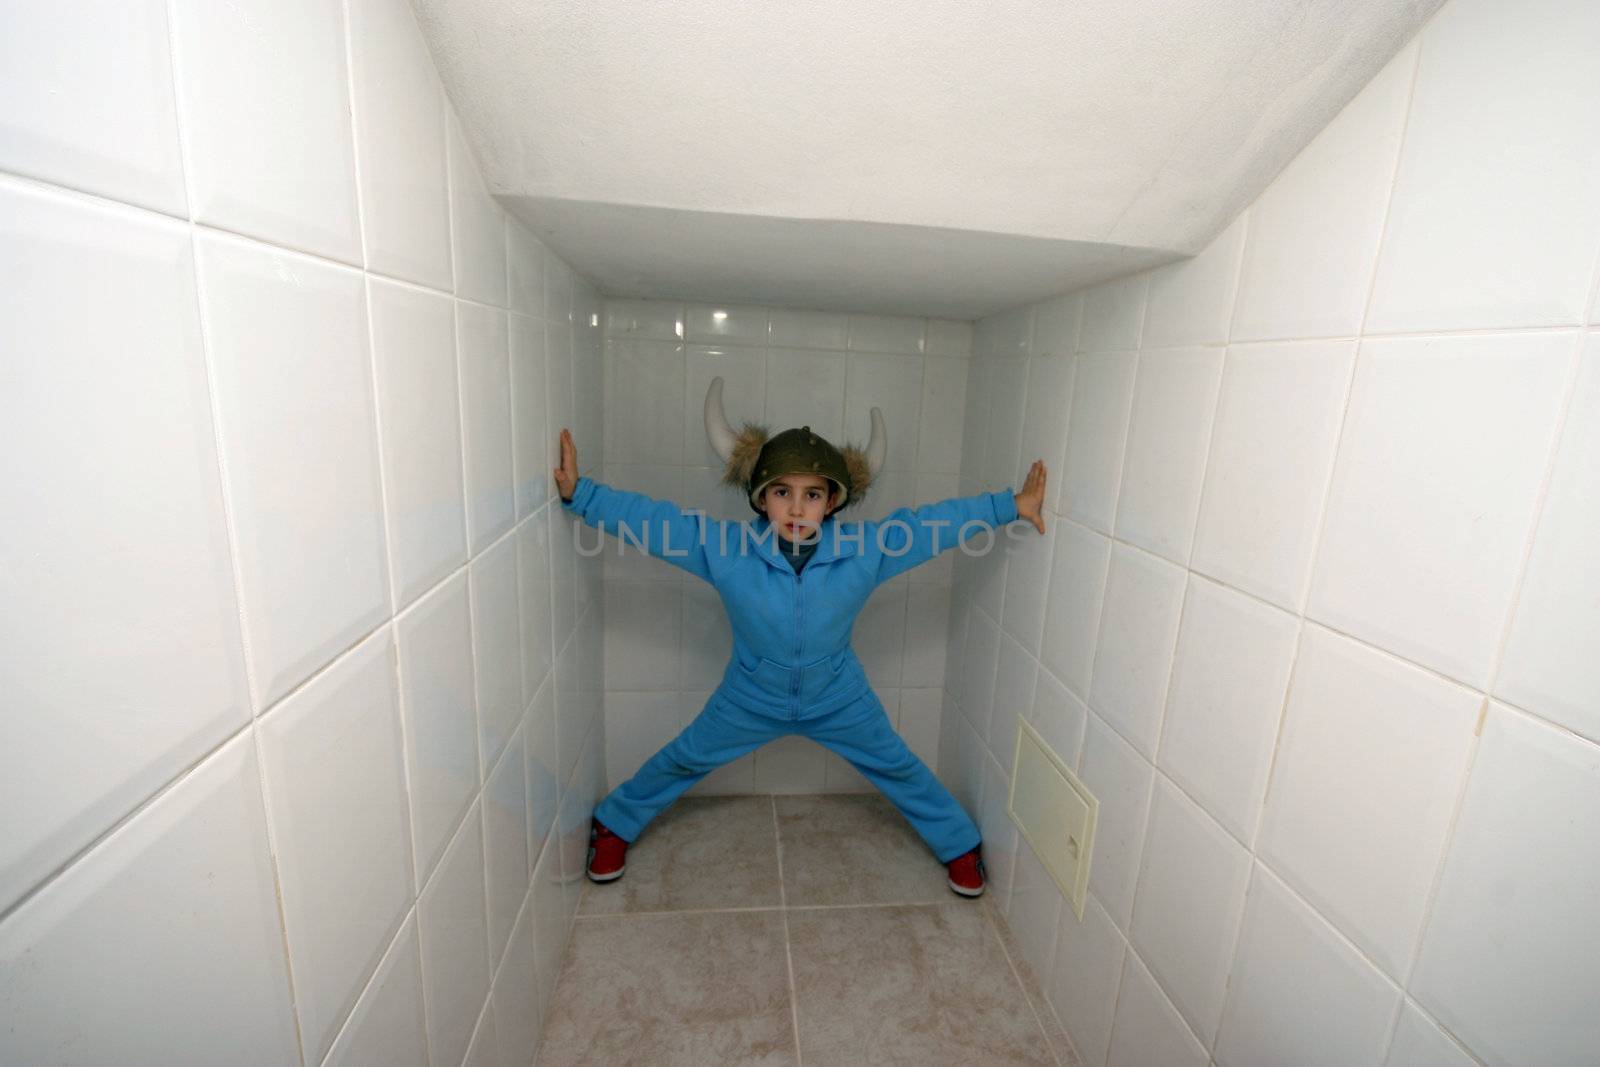 child trapped in a corner